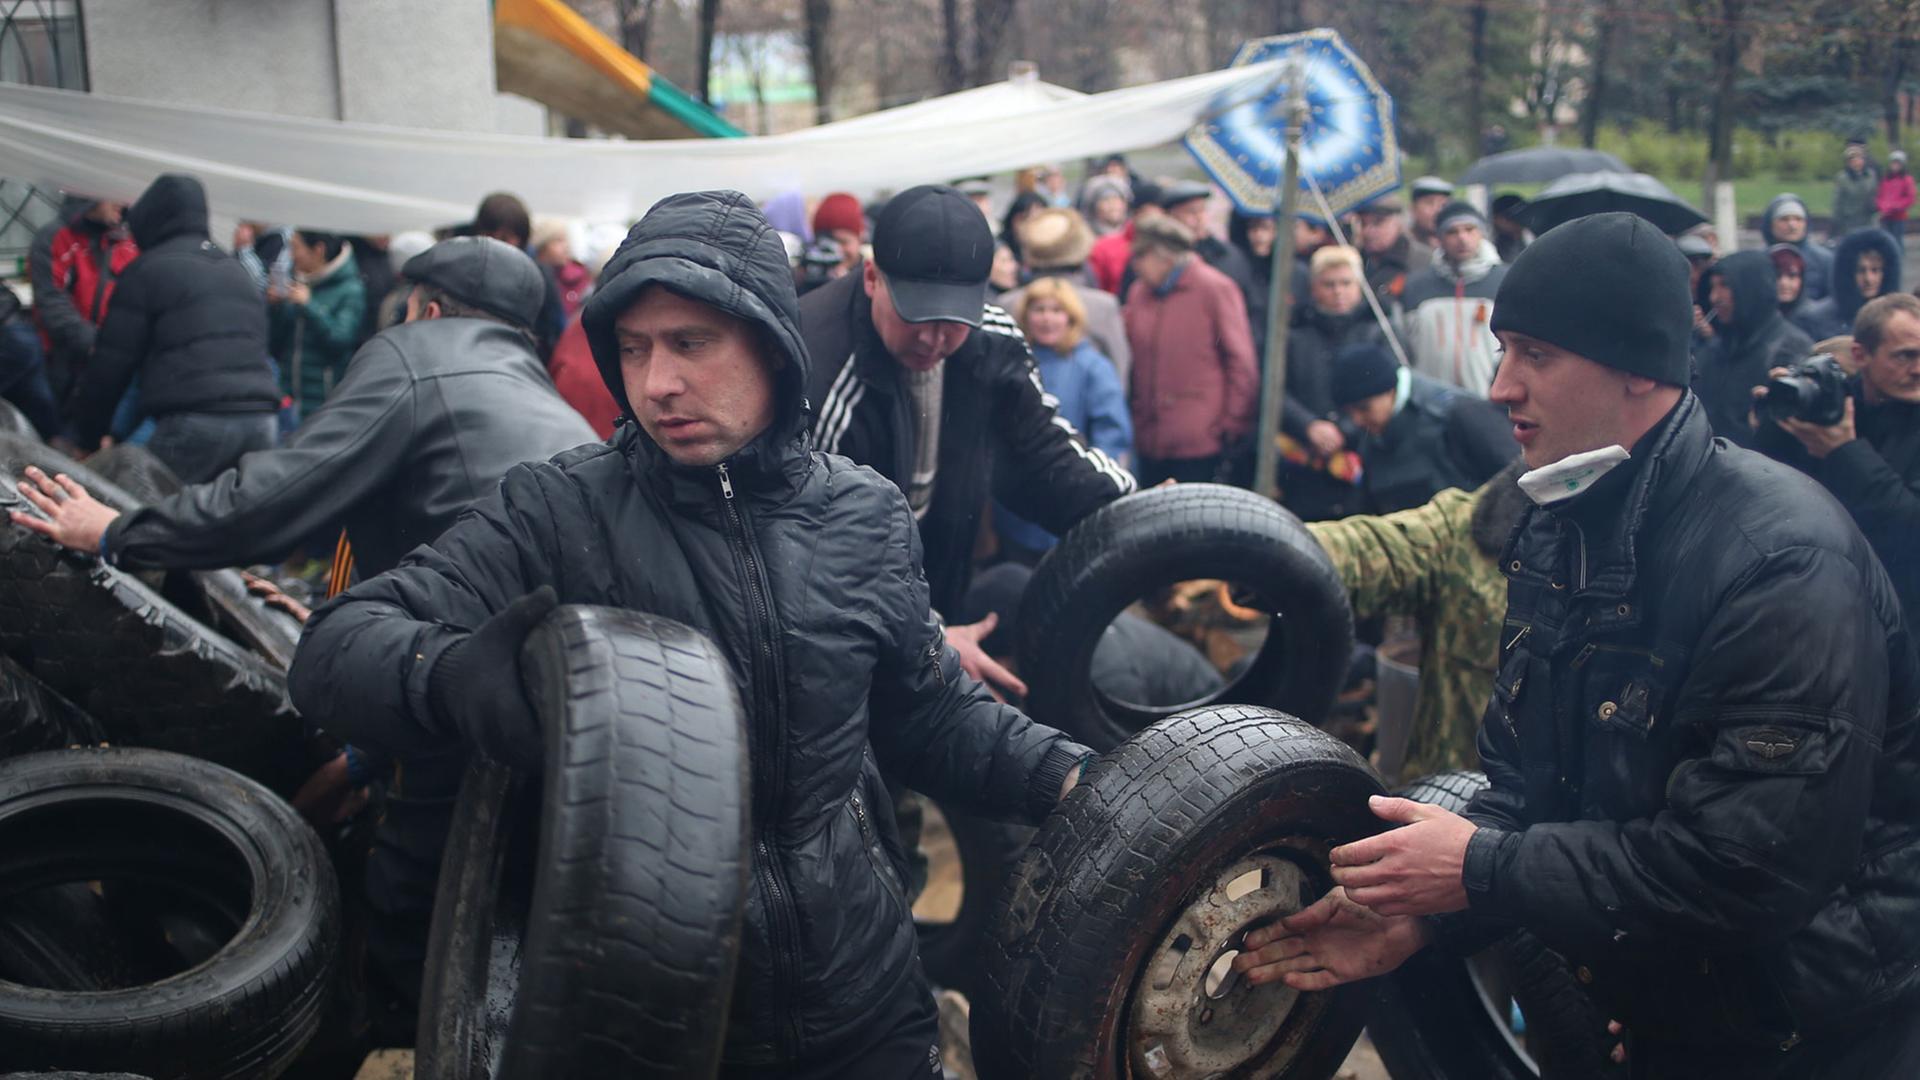 Ukraine's federalisation supporters build a barricade in a Slavyansk street.